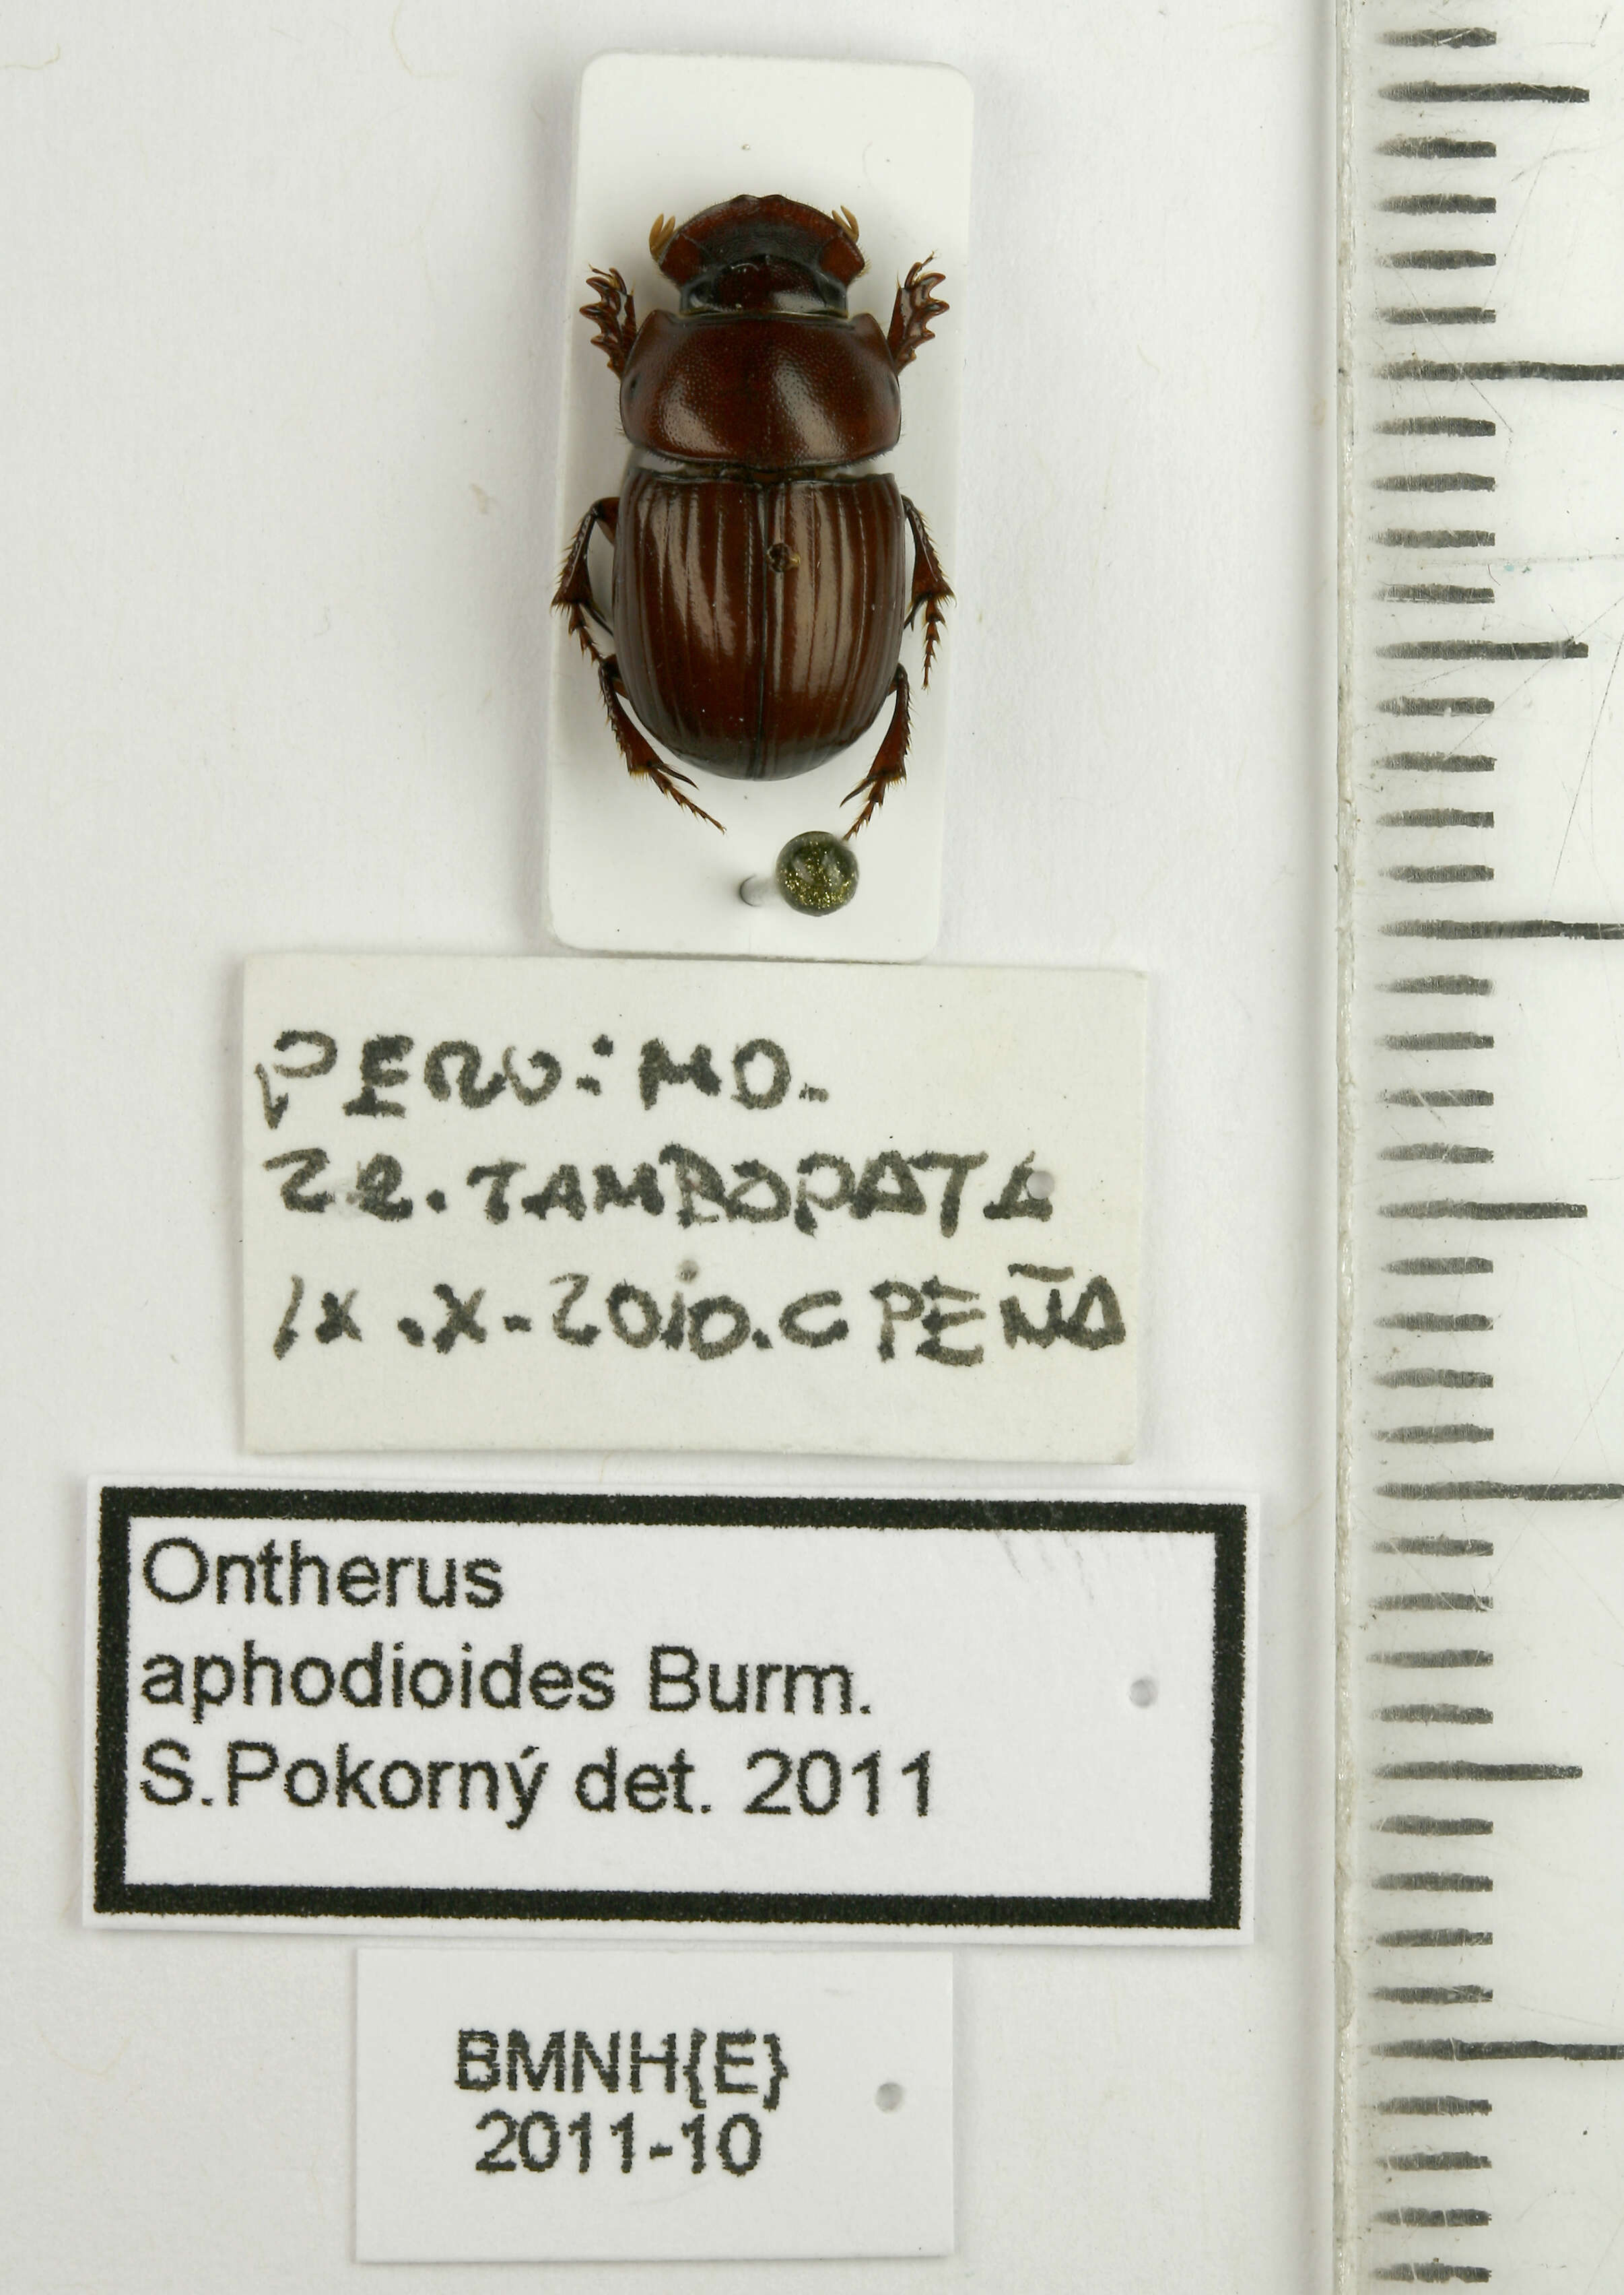 Image of Ontherus